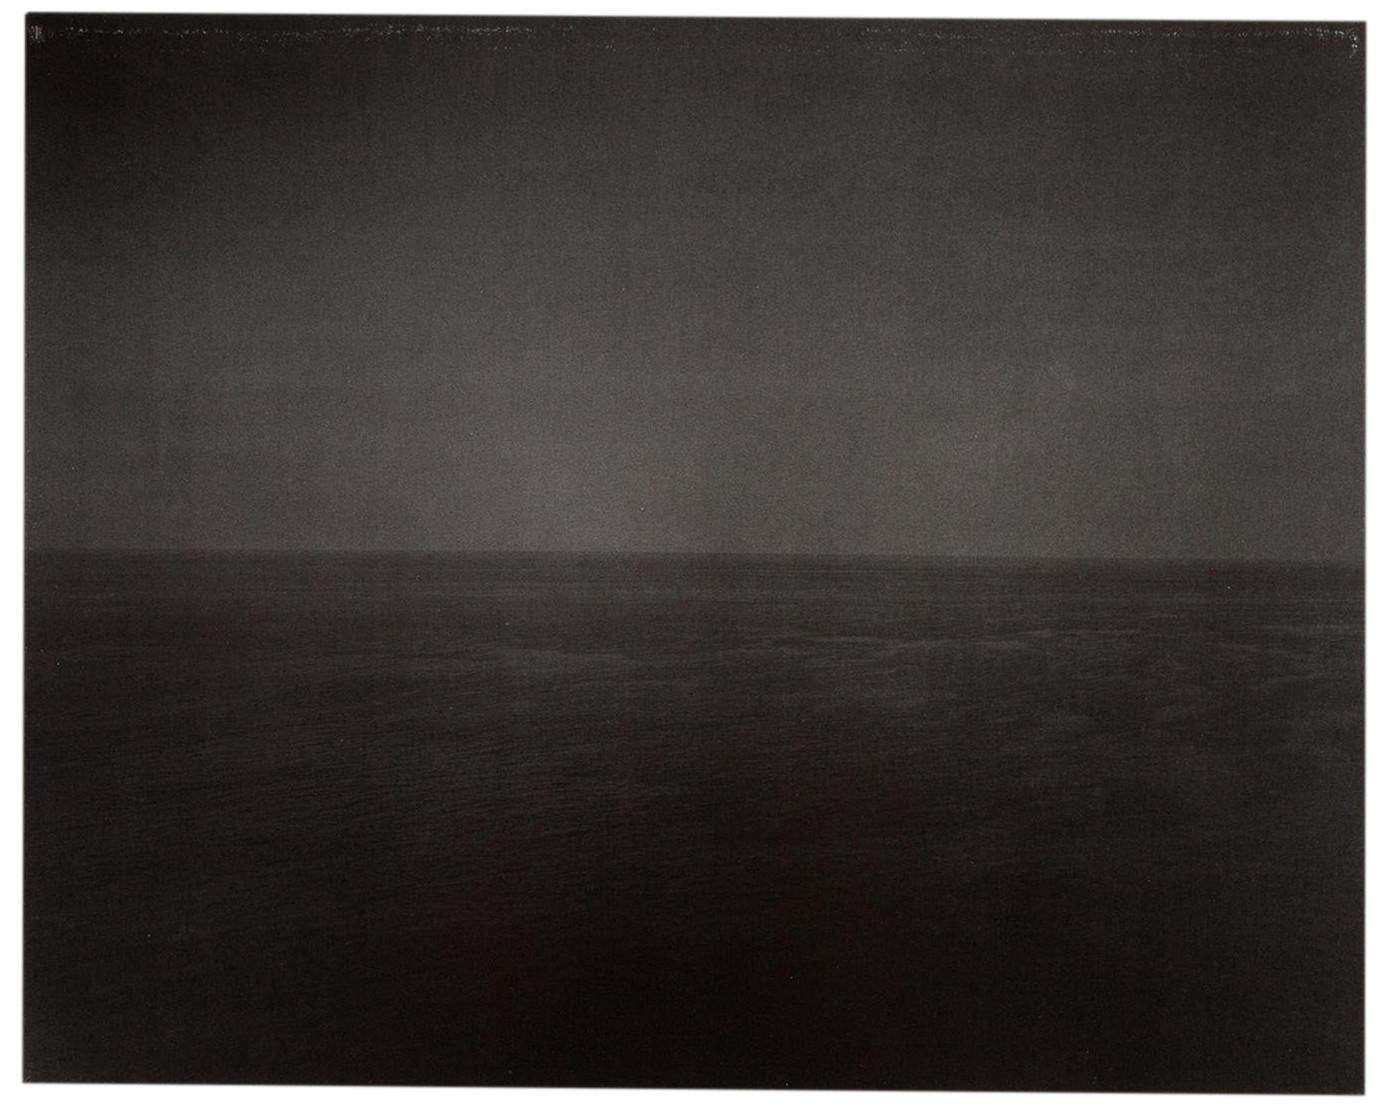 Hiroshi Sugimoto Landscape Photograph - Time Exposed: #357 Ionian Sea, Santa Cesarea 1990